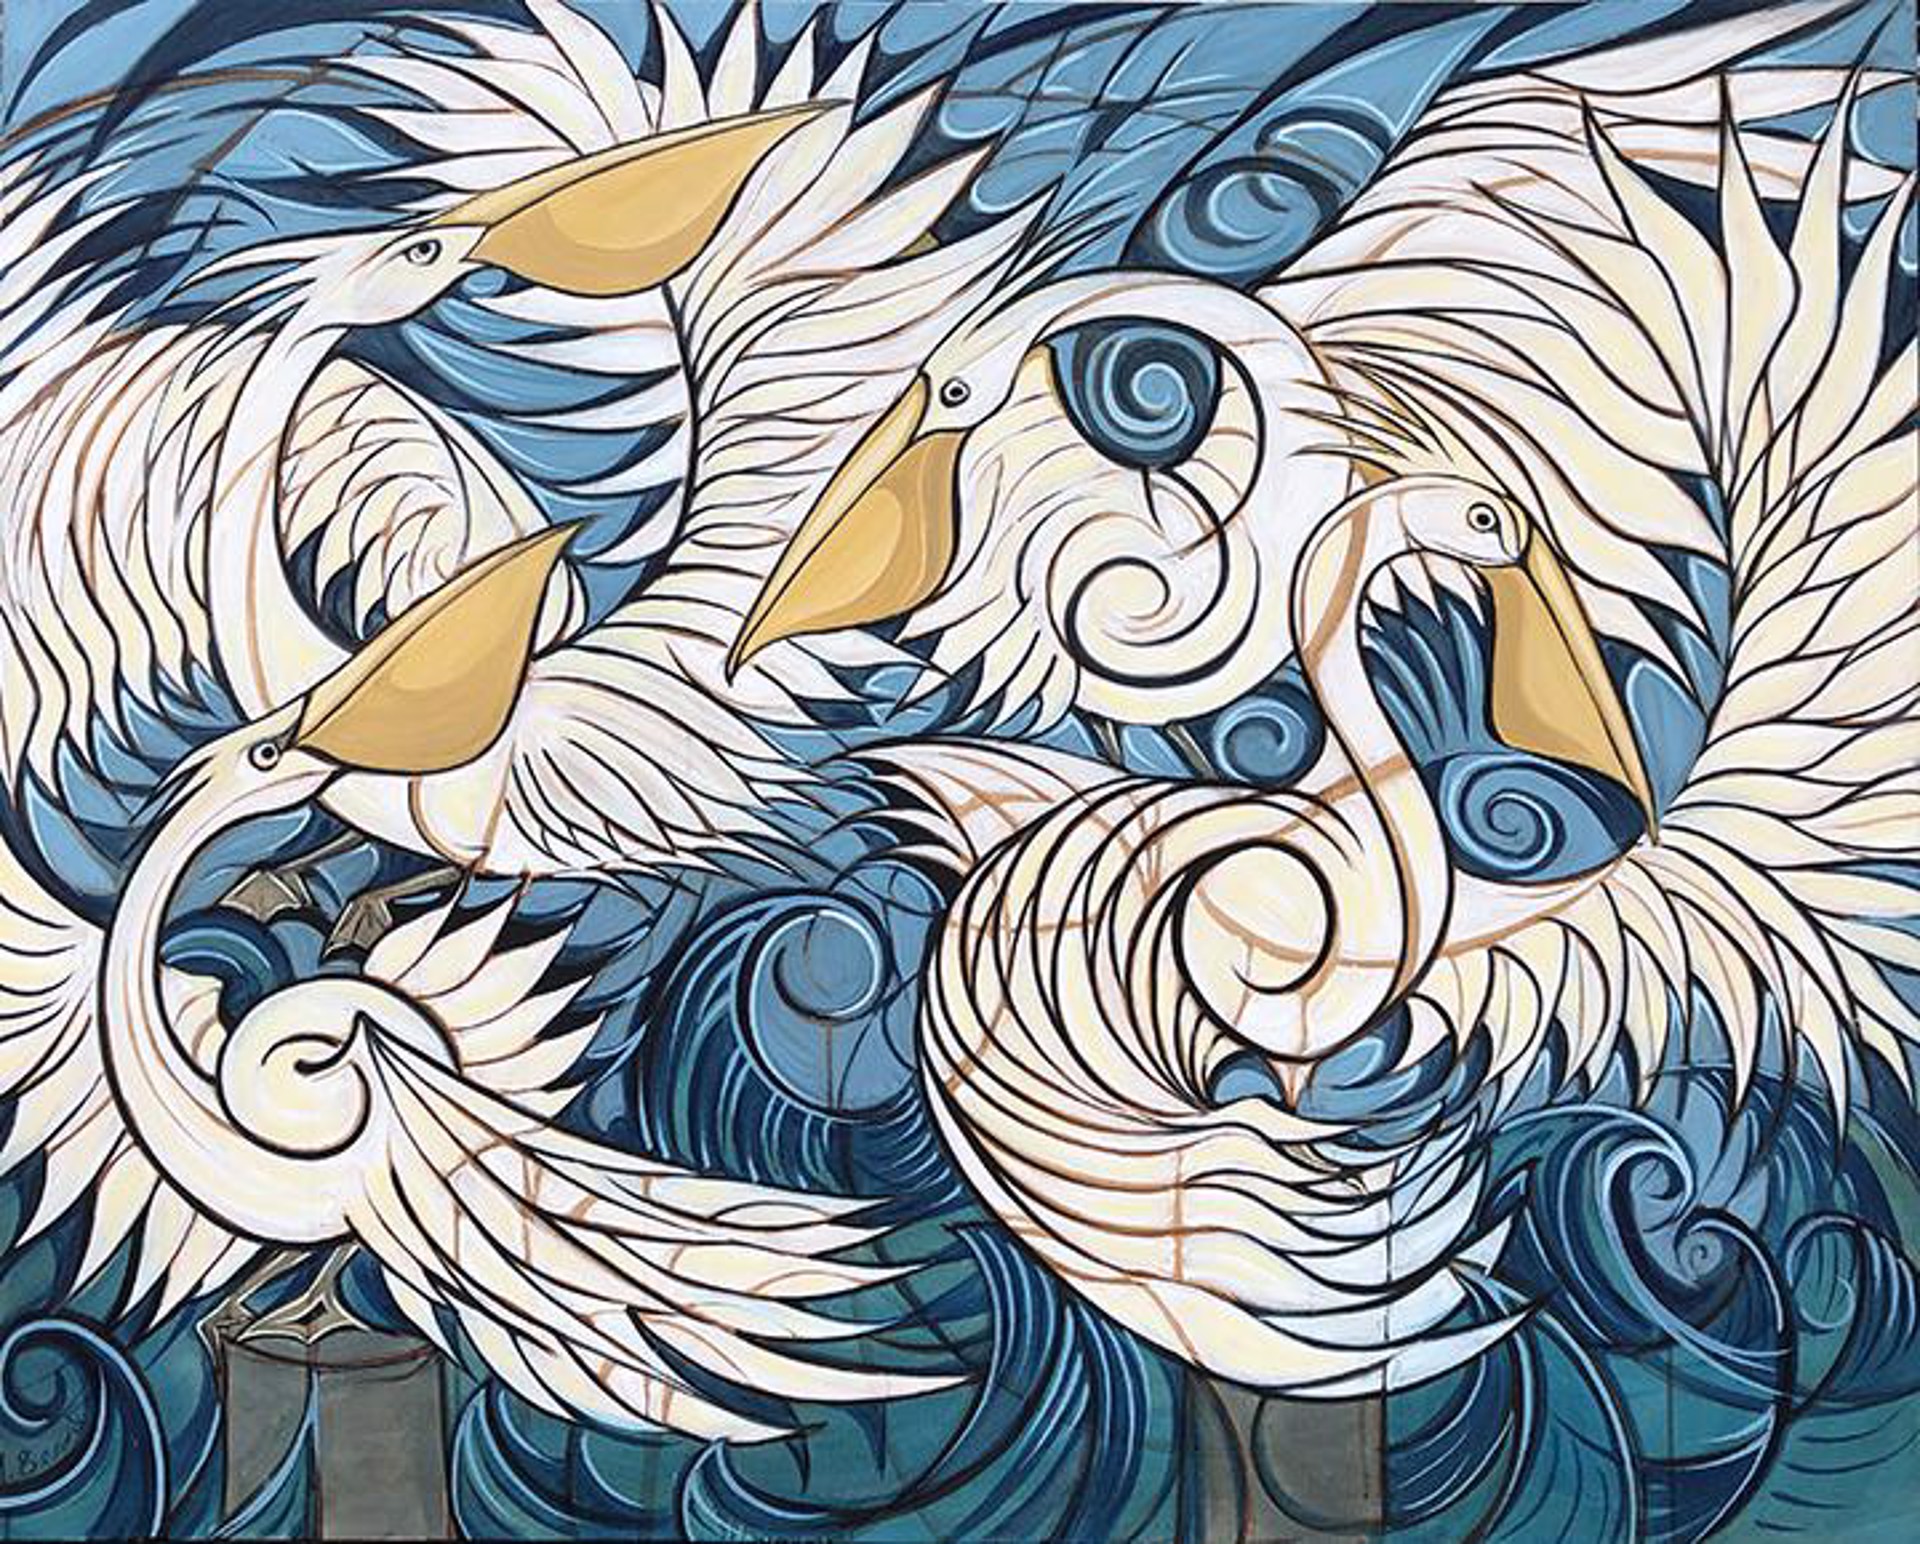 The Pelicans of Blue Bayou by Alex Beard